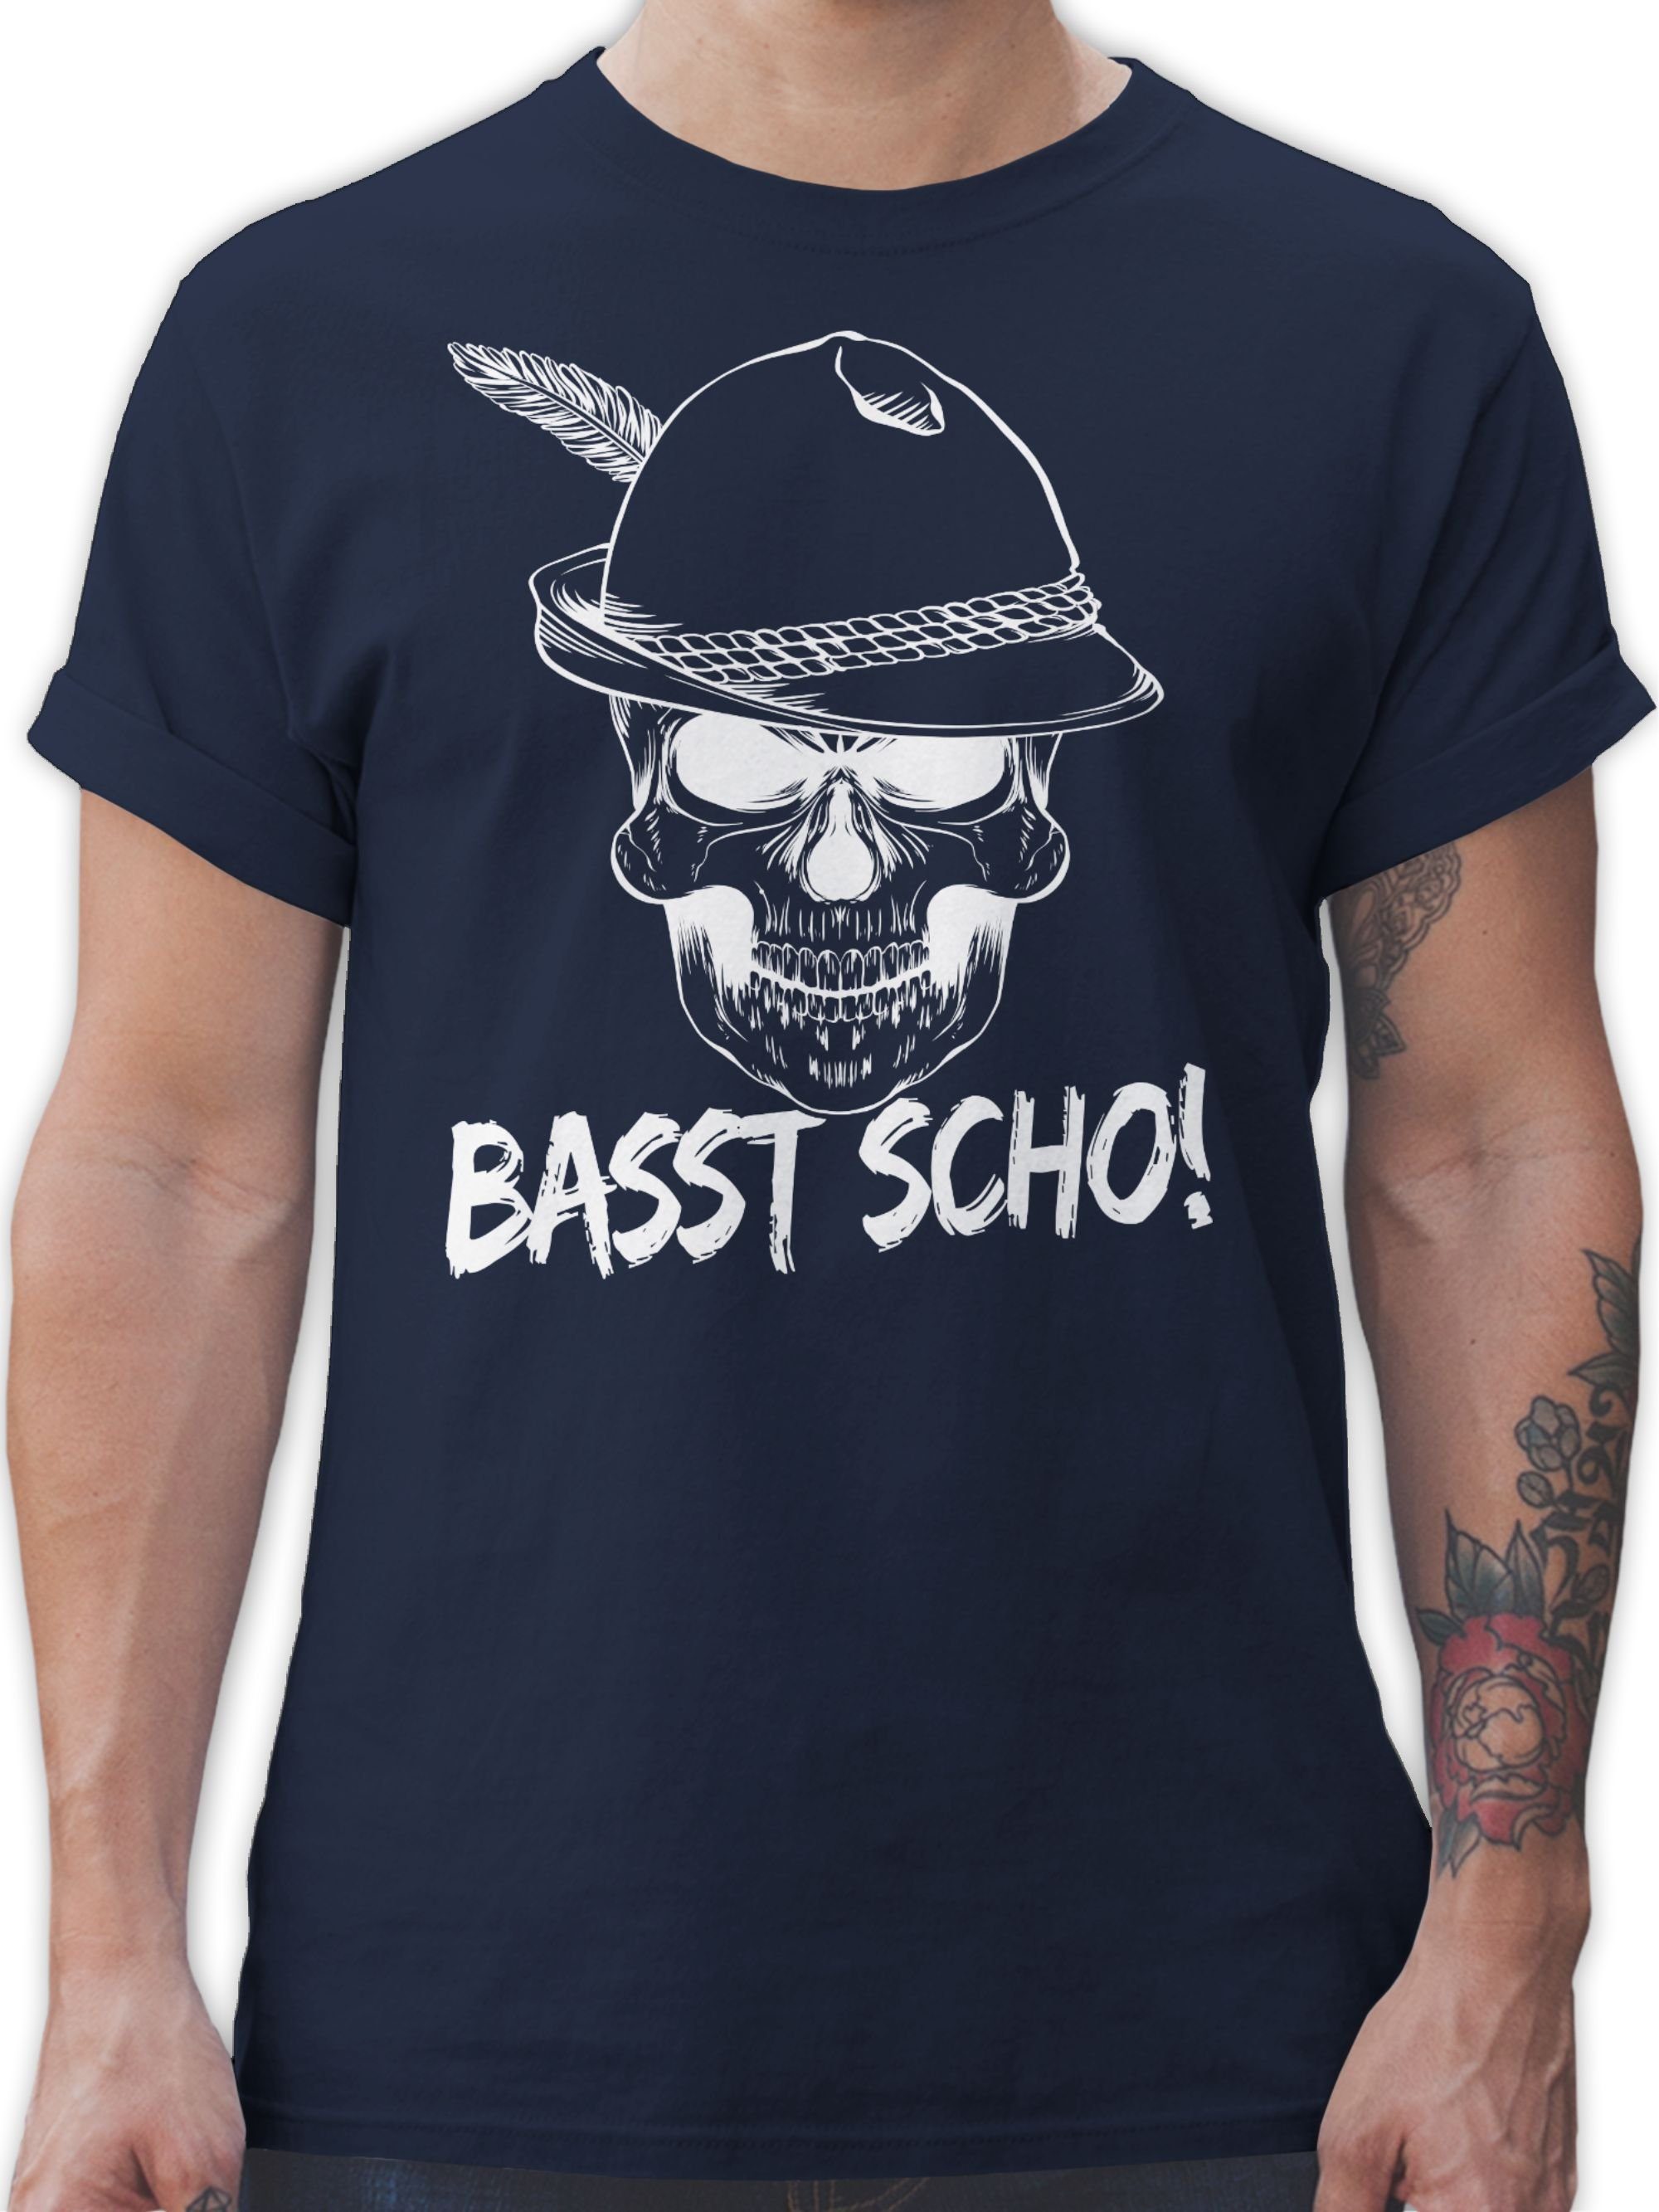 Shirtracer T-Shirt Totenkopf Basst scho! - Mode für Oktoberfest Herren -  Herren Premium T-Shirt tracht tshirt herren - trachten- tshirts -  trachtenshirt männer